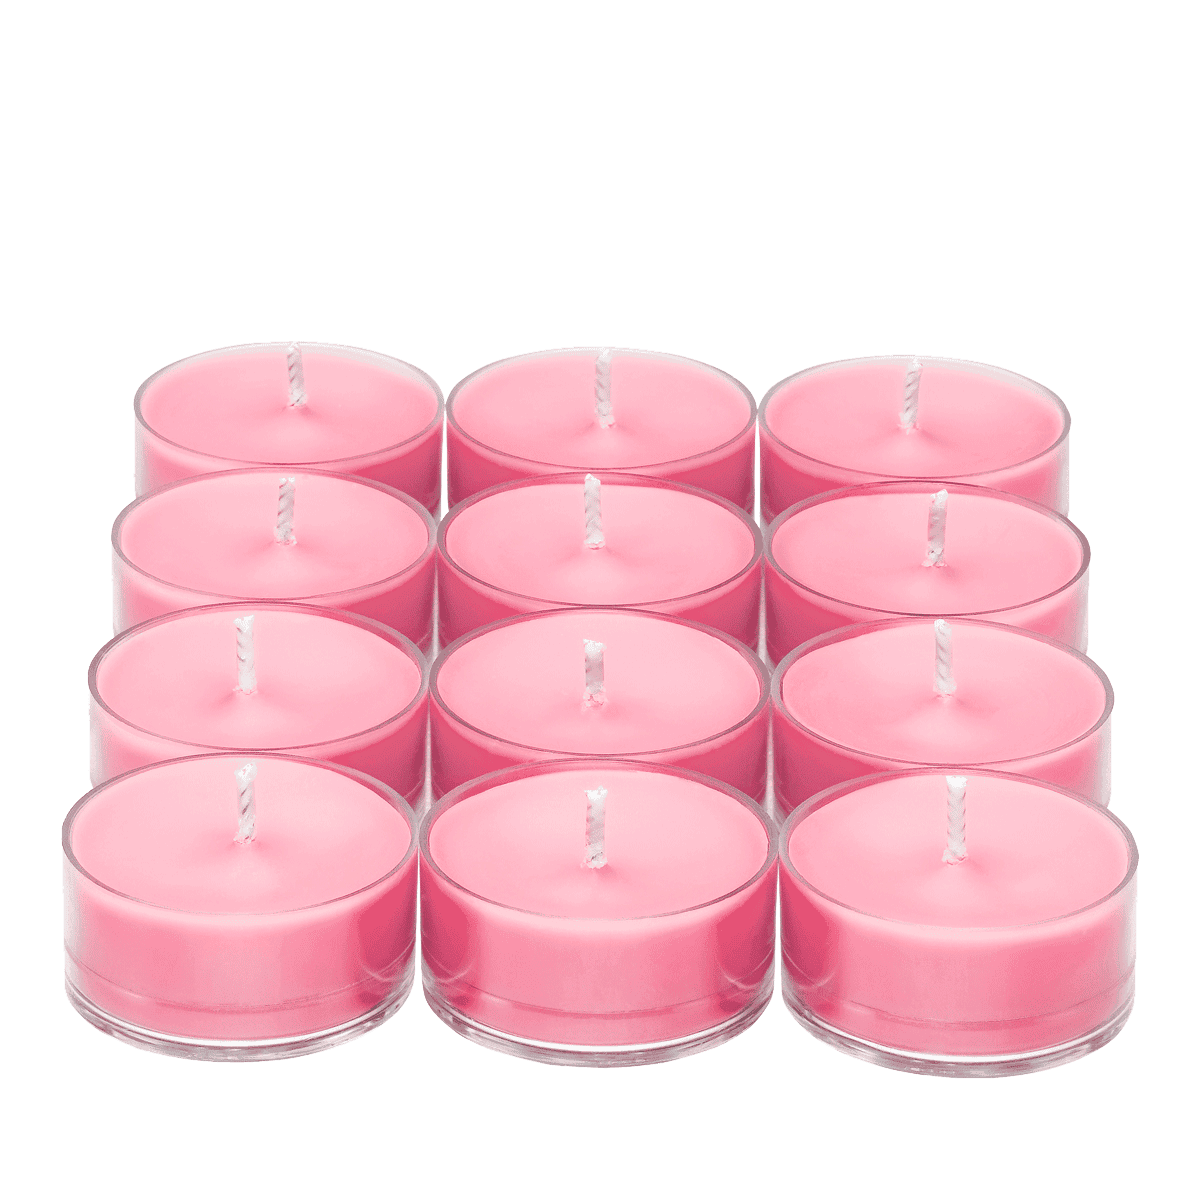 Raspberry Rhubarb Universal Tealight Candles